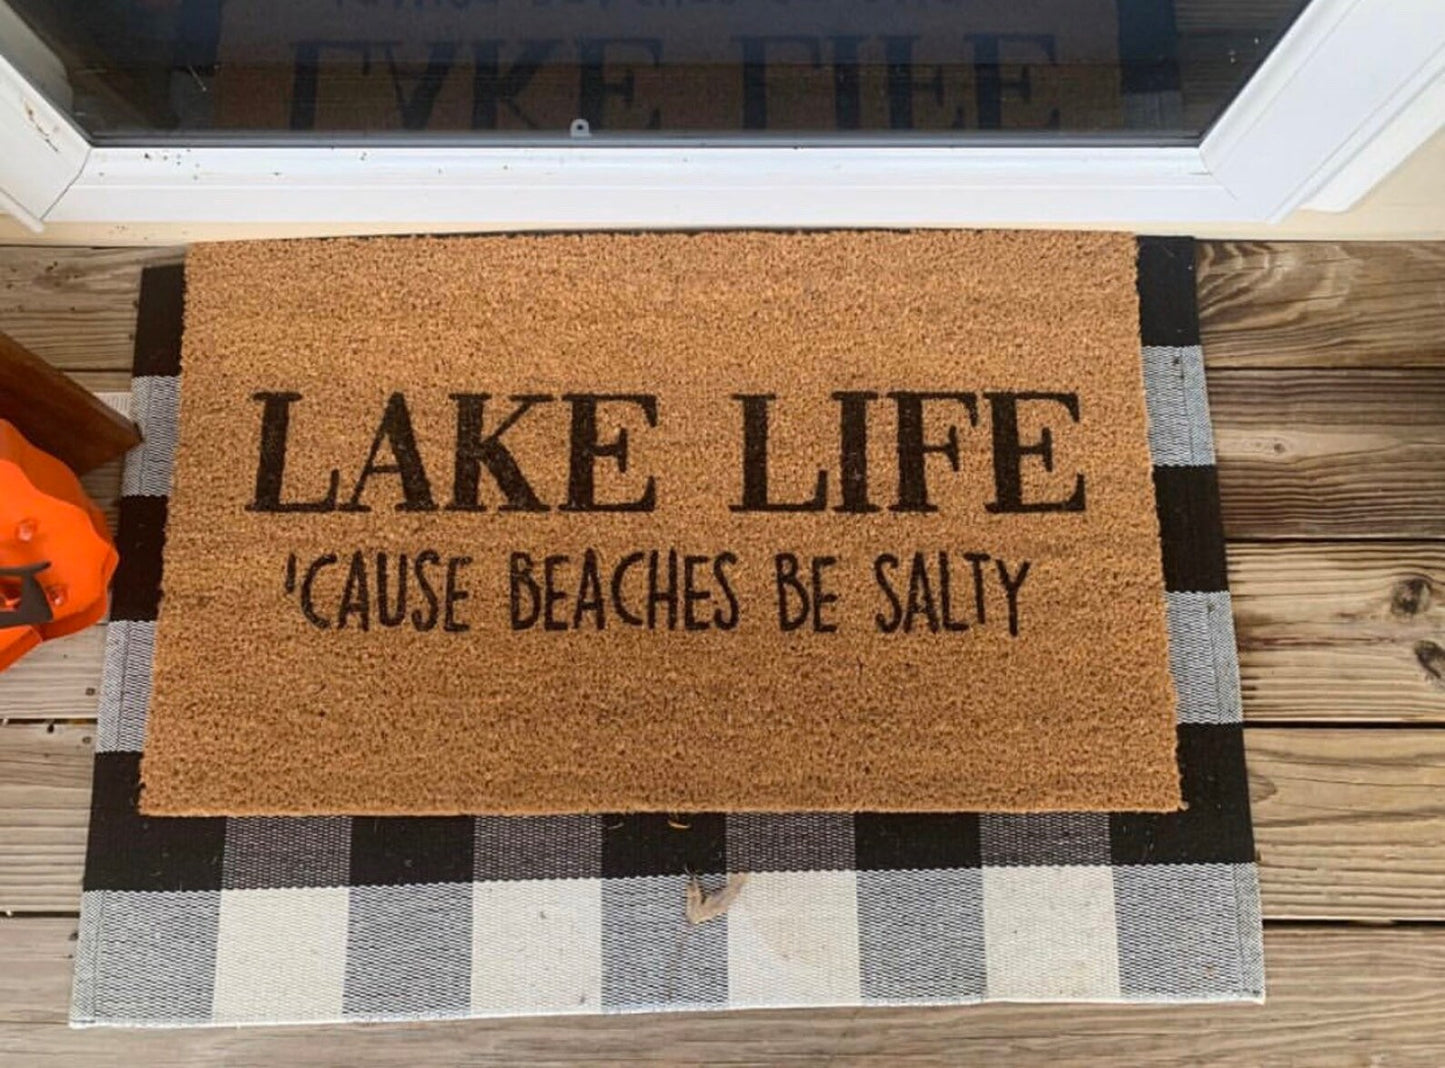 Lake Life 'Cause Beaches Be Salty Doormat